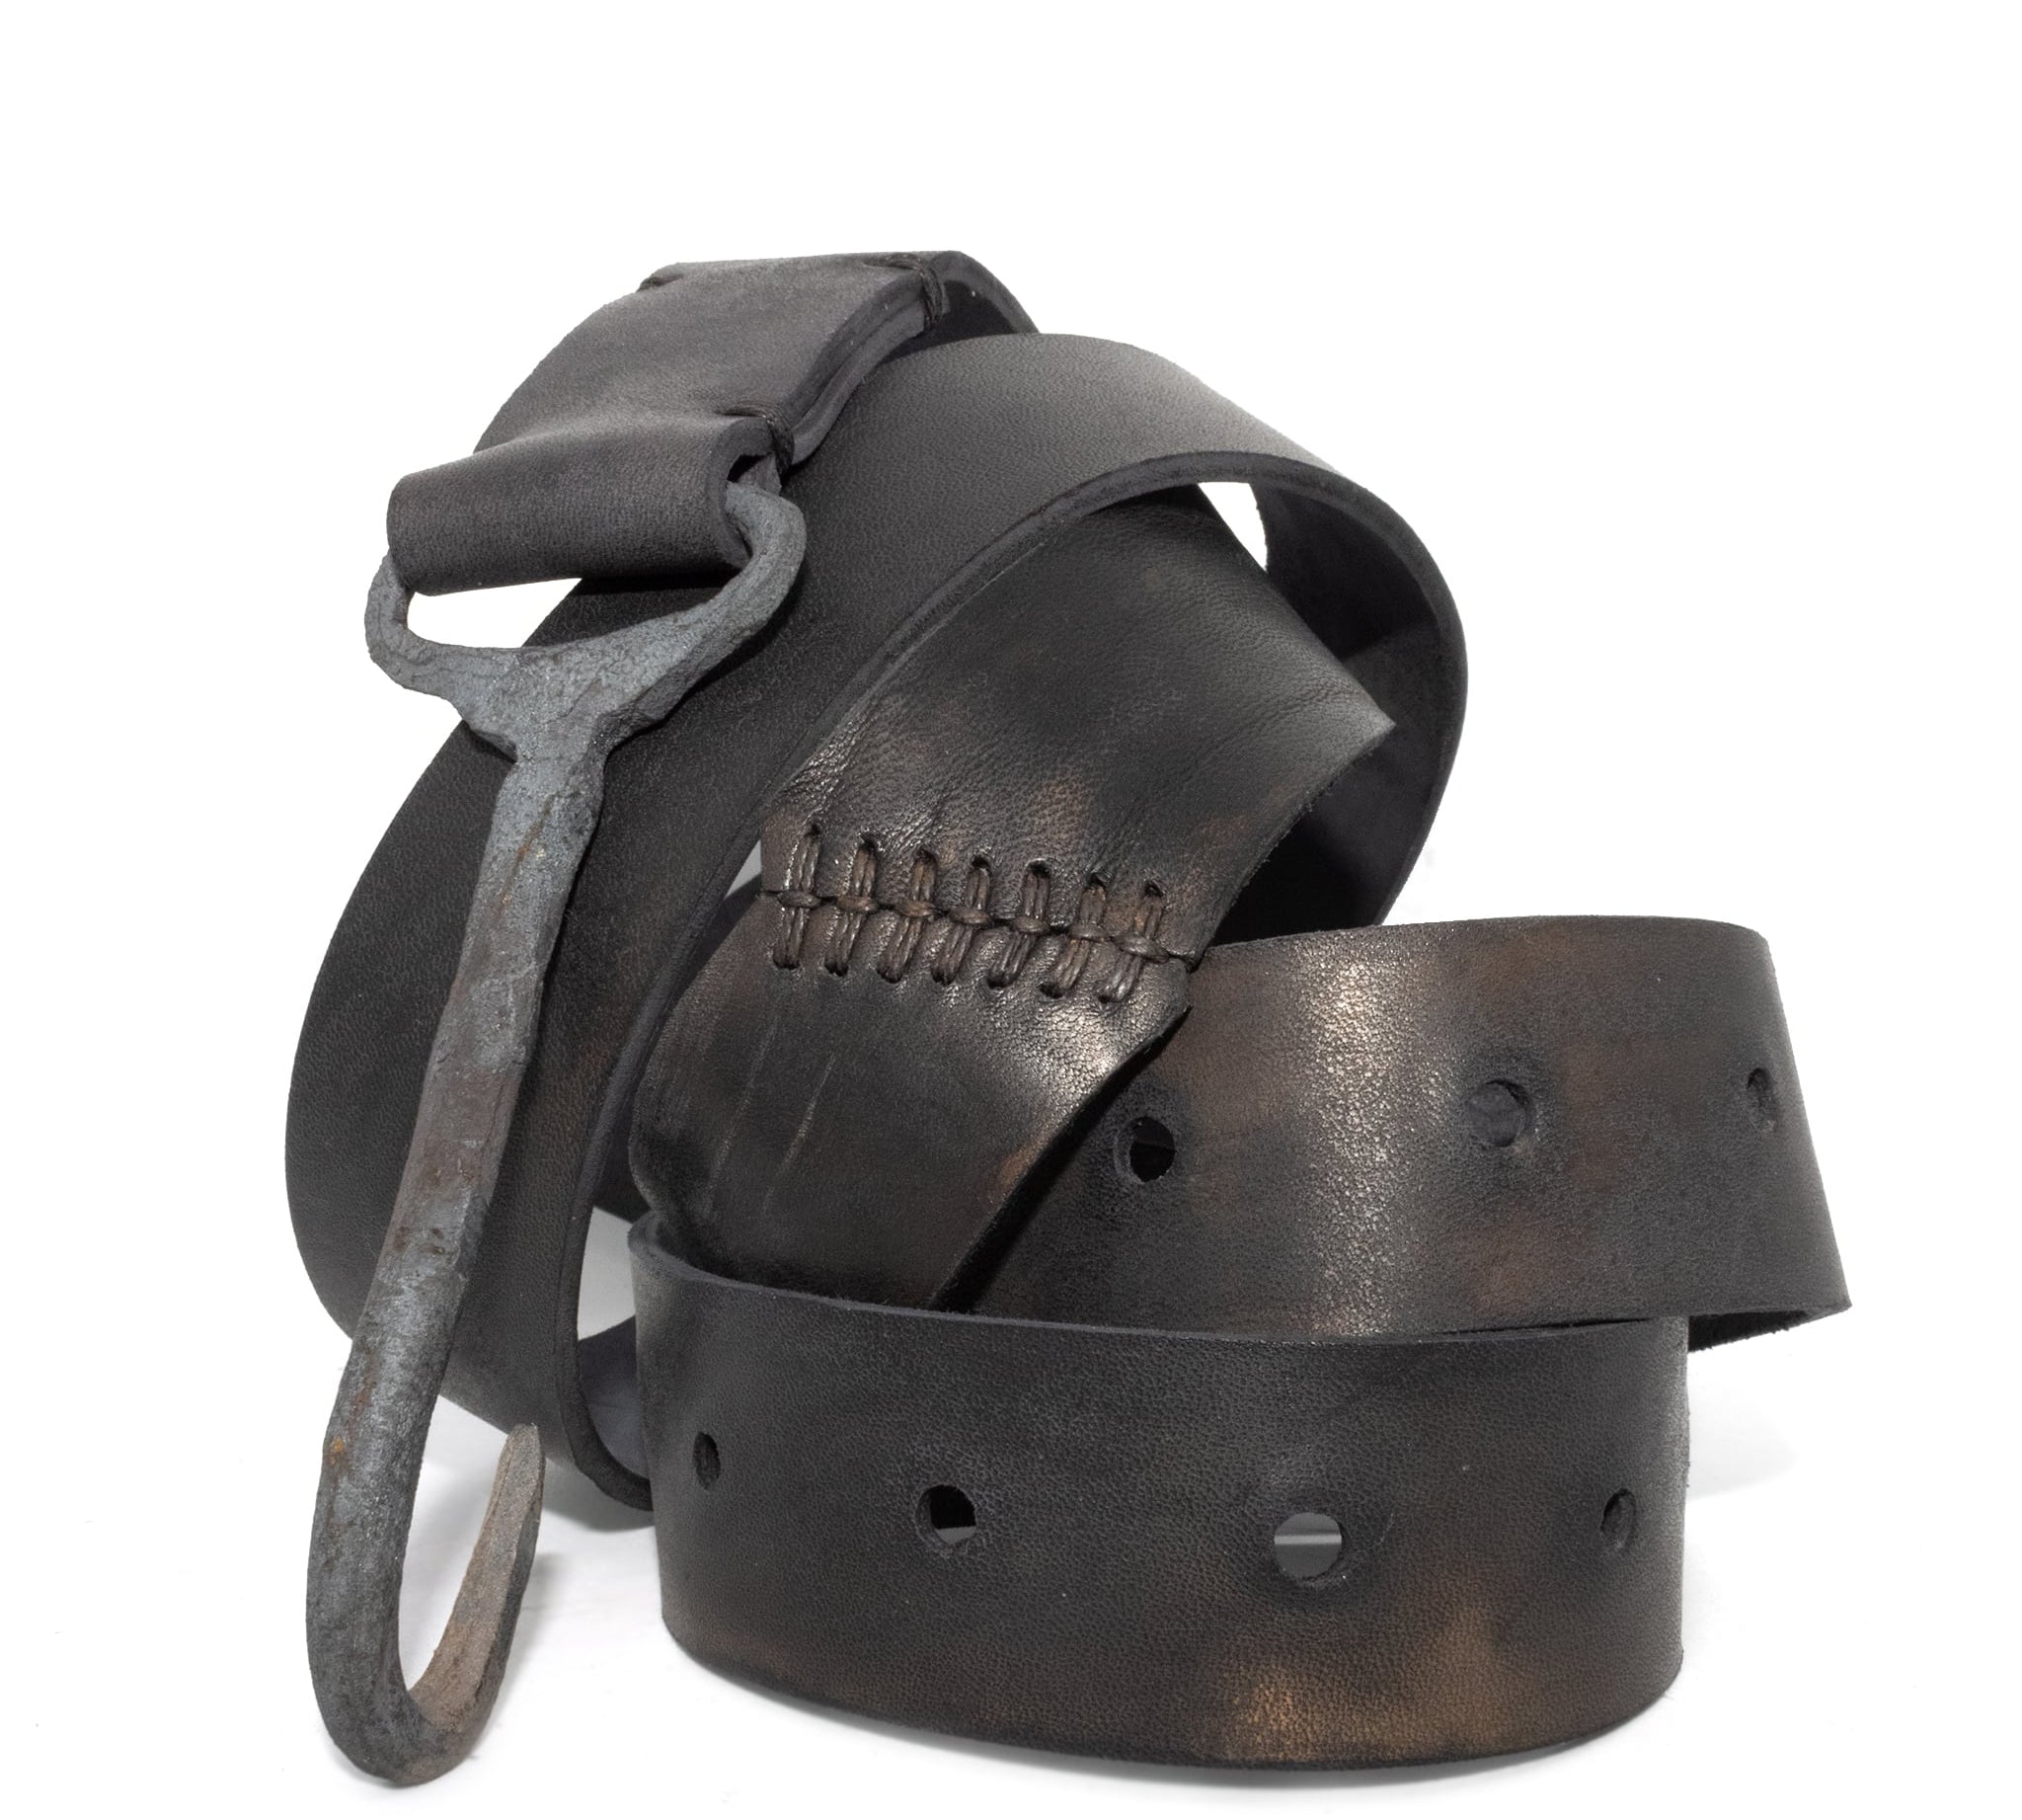 avant garde hand sewn leather belts from atelier skn